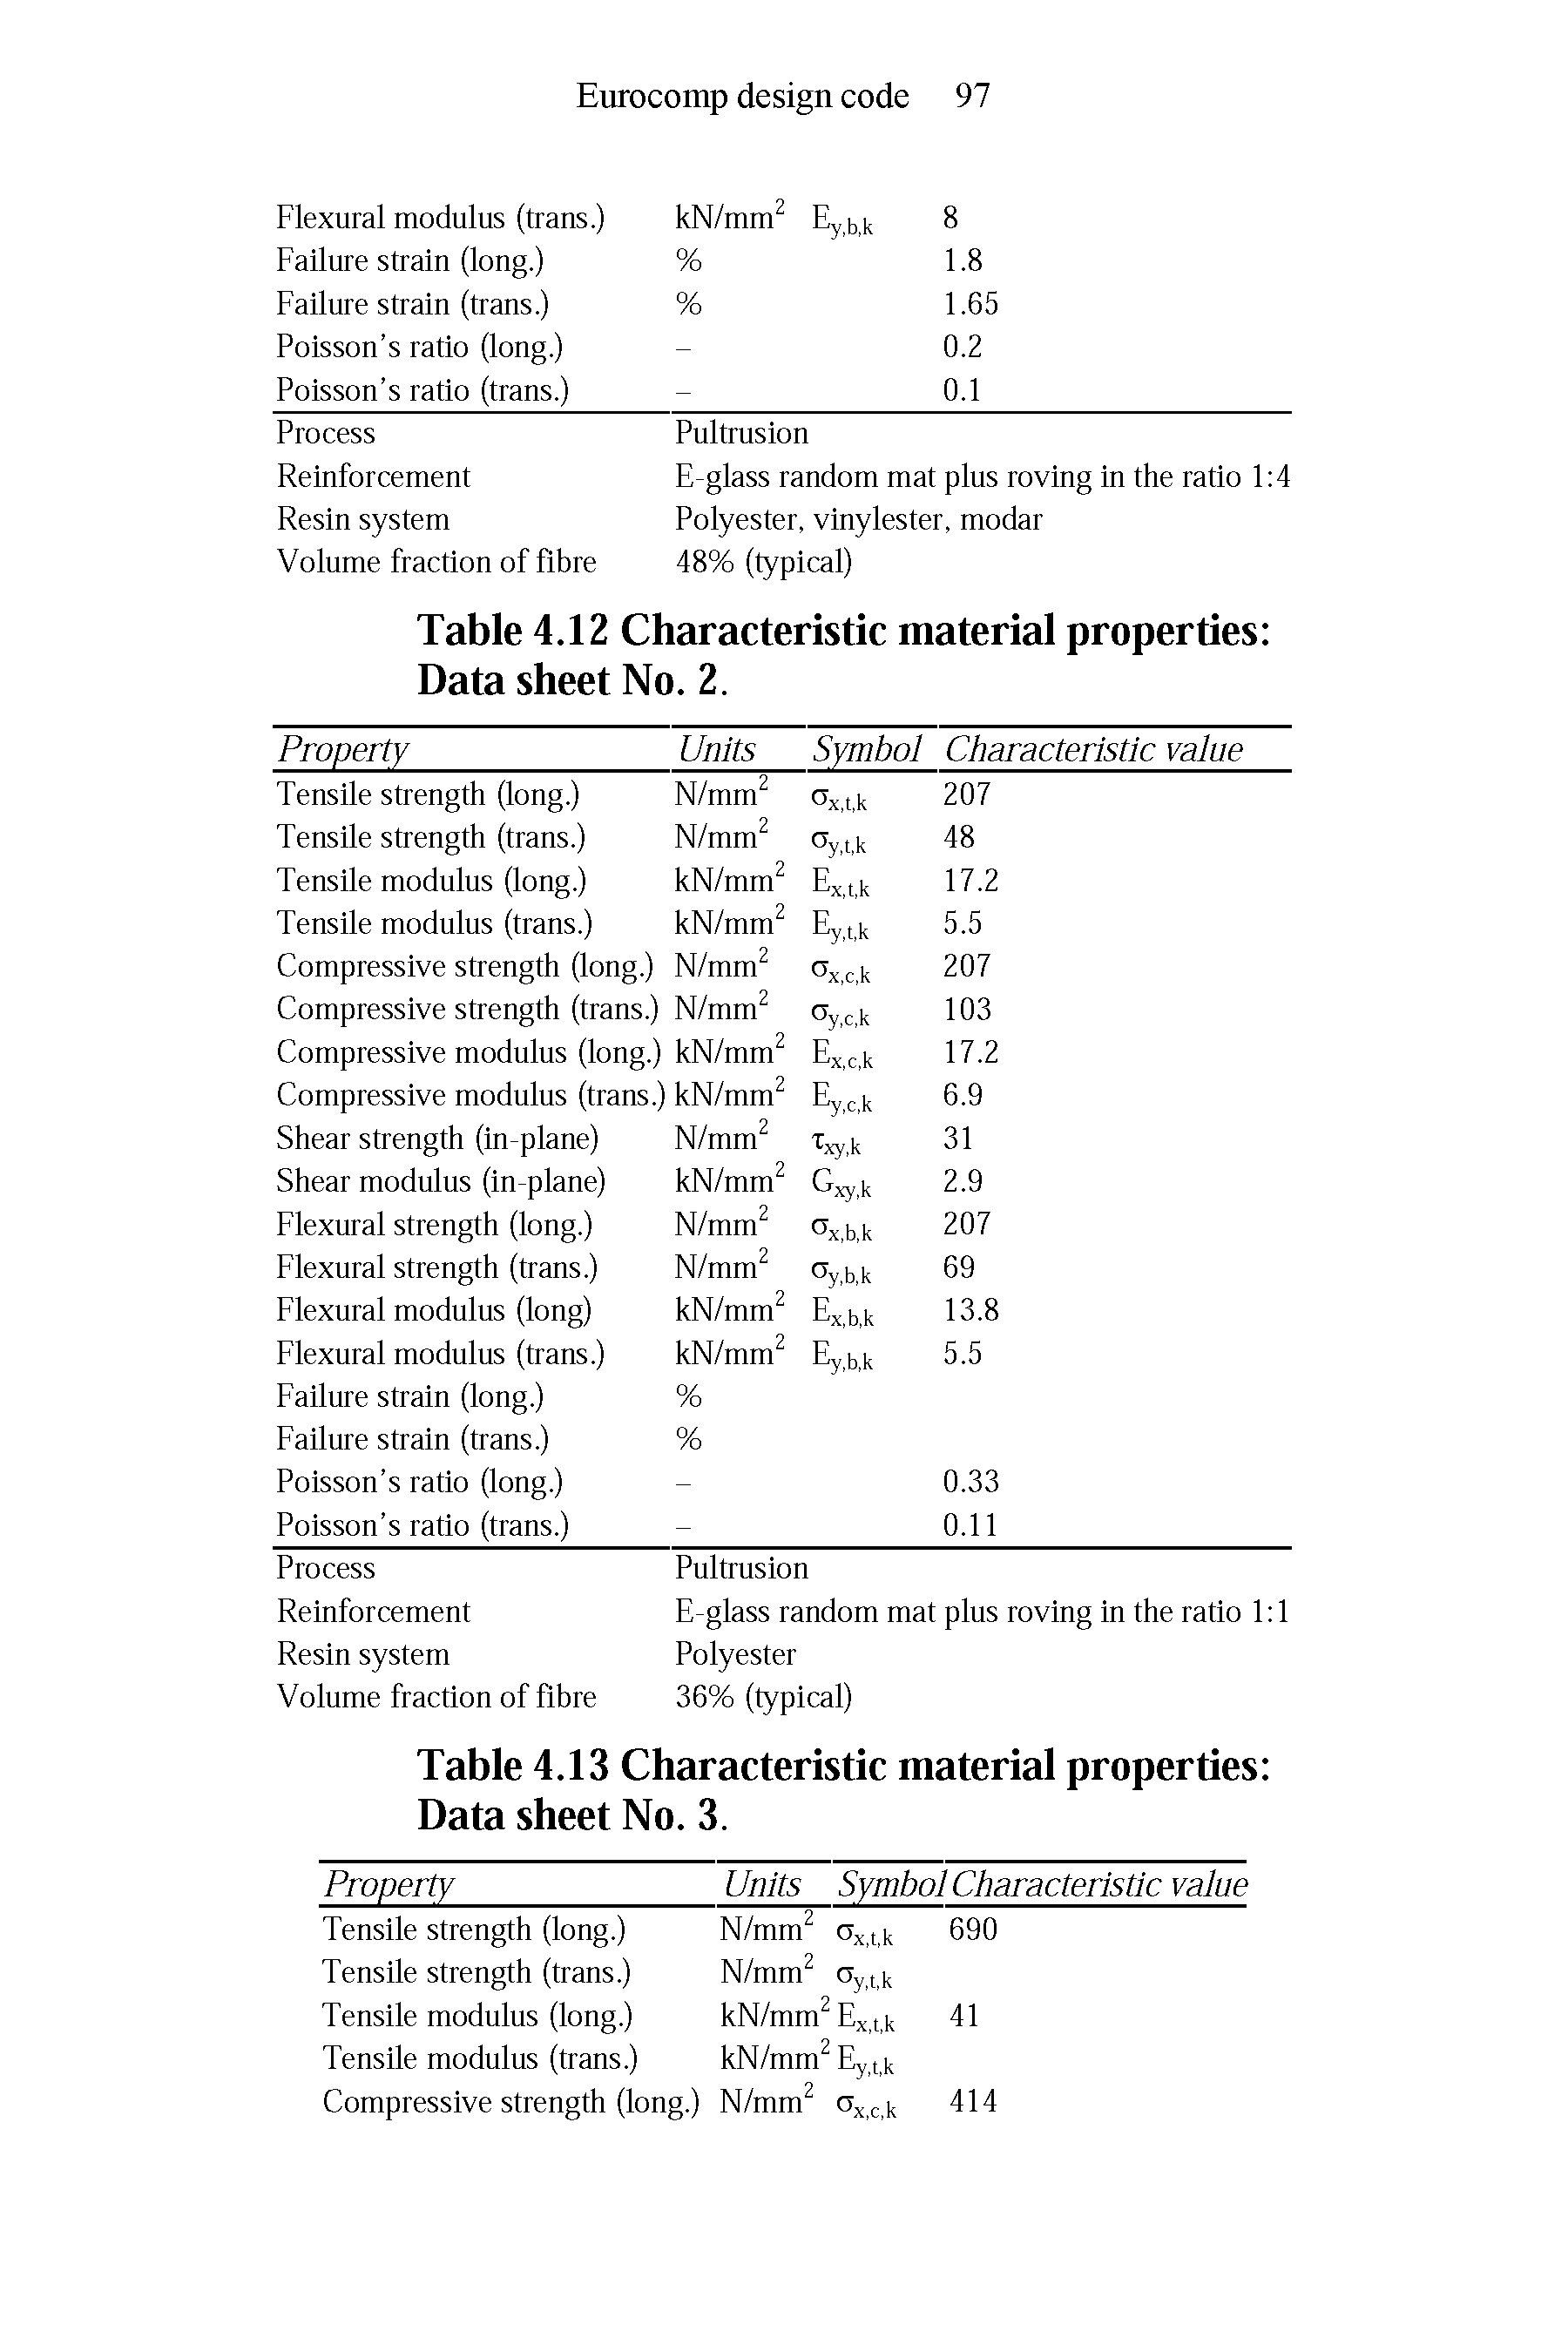 Table 4.12 Characteristic material properties Data sheet No. 2.